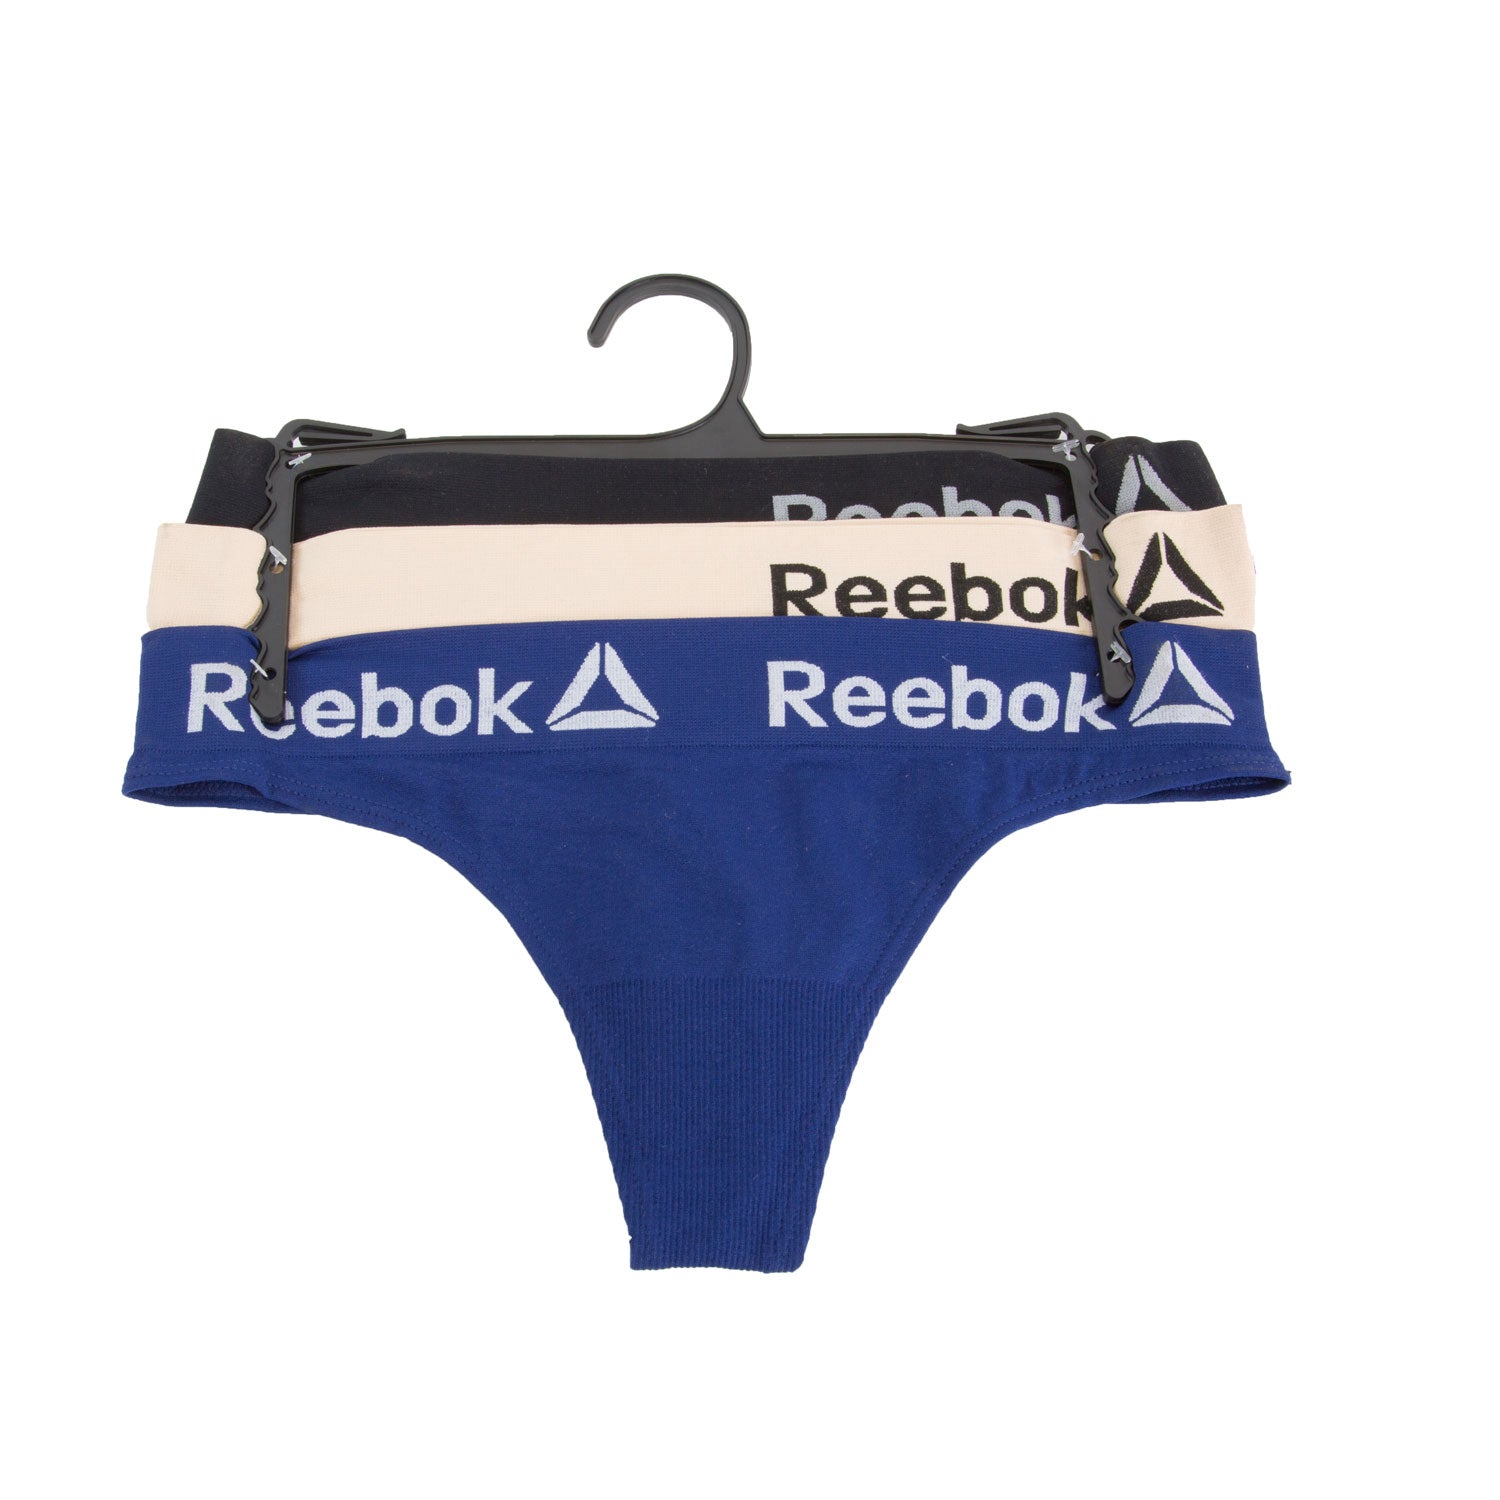 Reebok Women's Underwear - Seamless Bikini Algeria